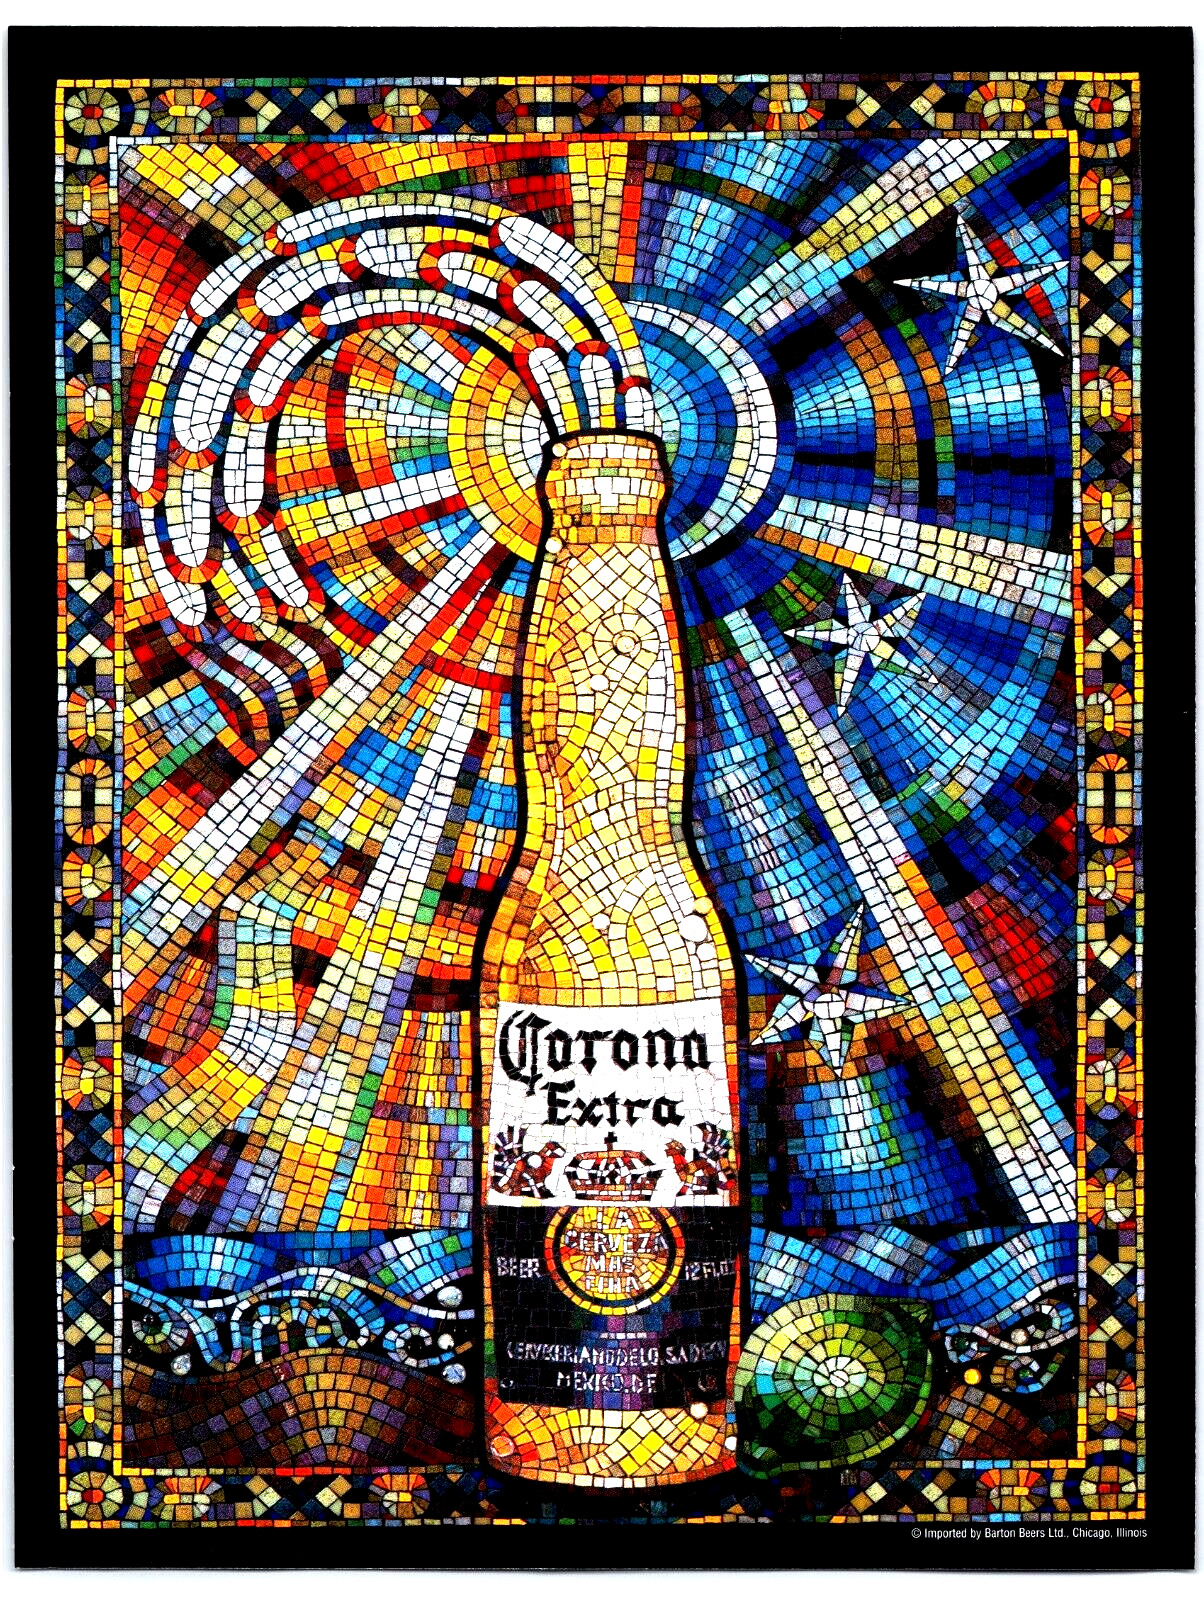 Vintage 1998 color print ad CORONA EXTRA beer